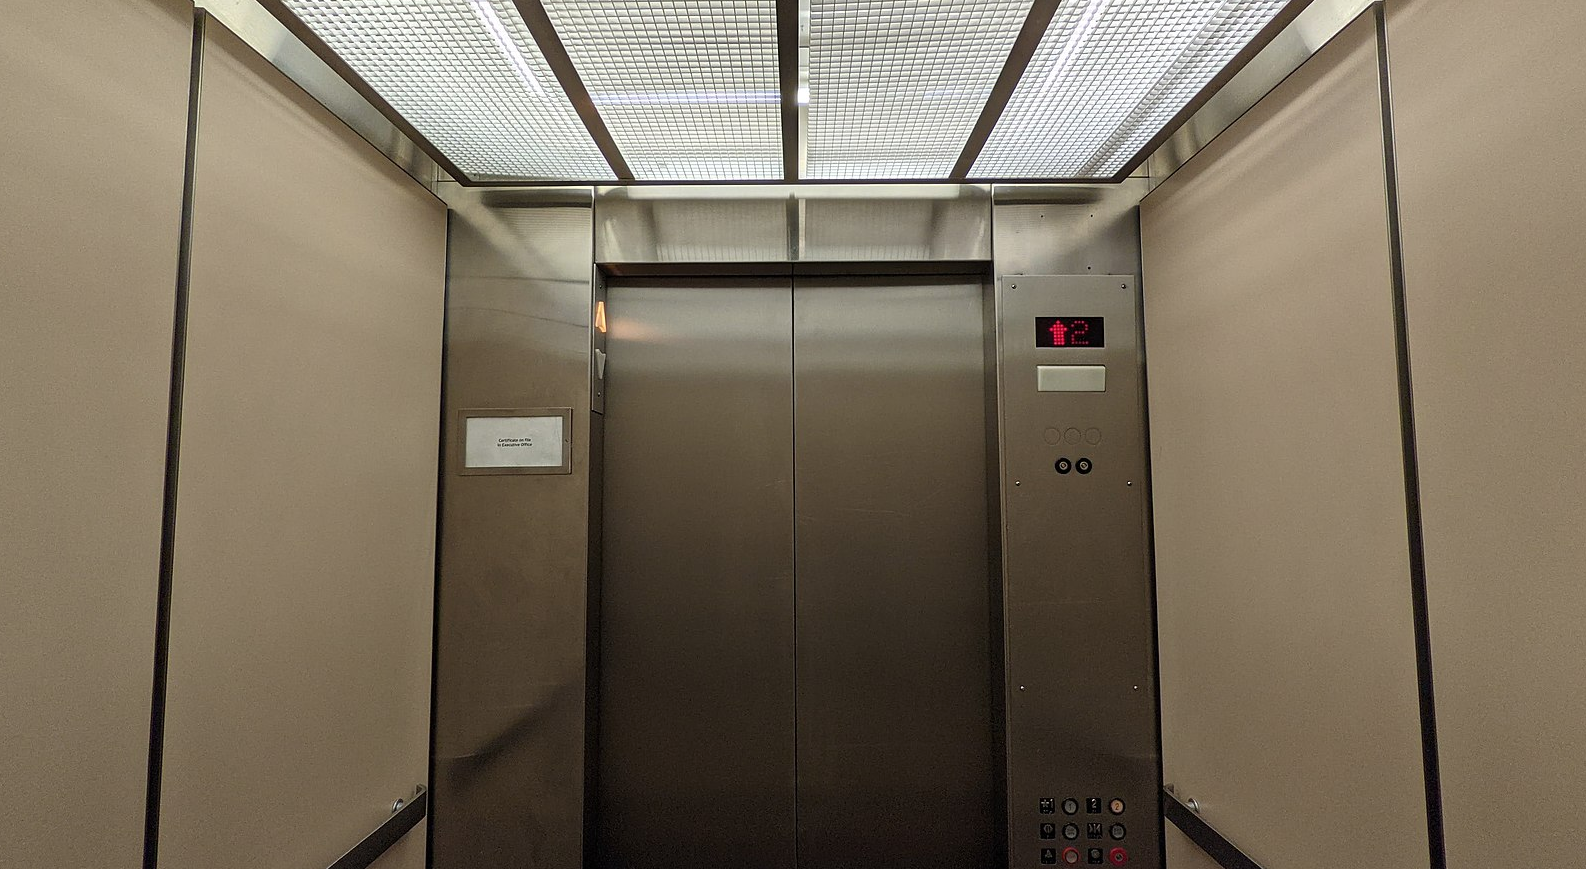 Elevator blues